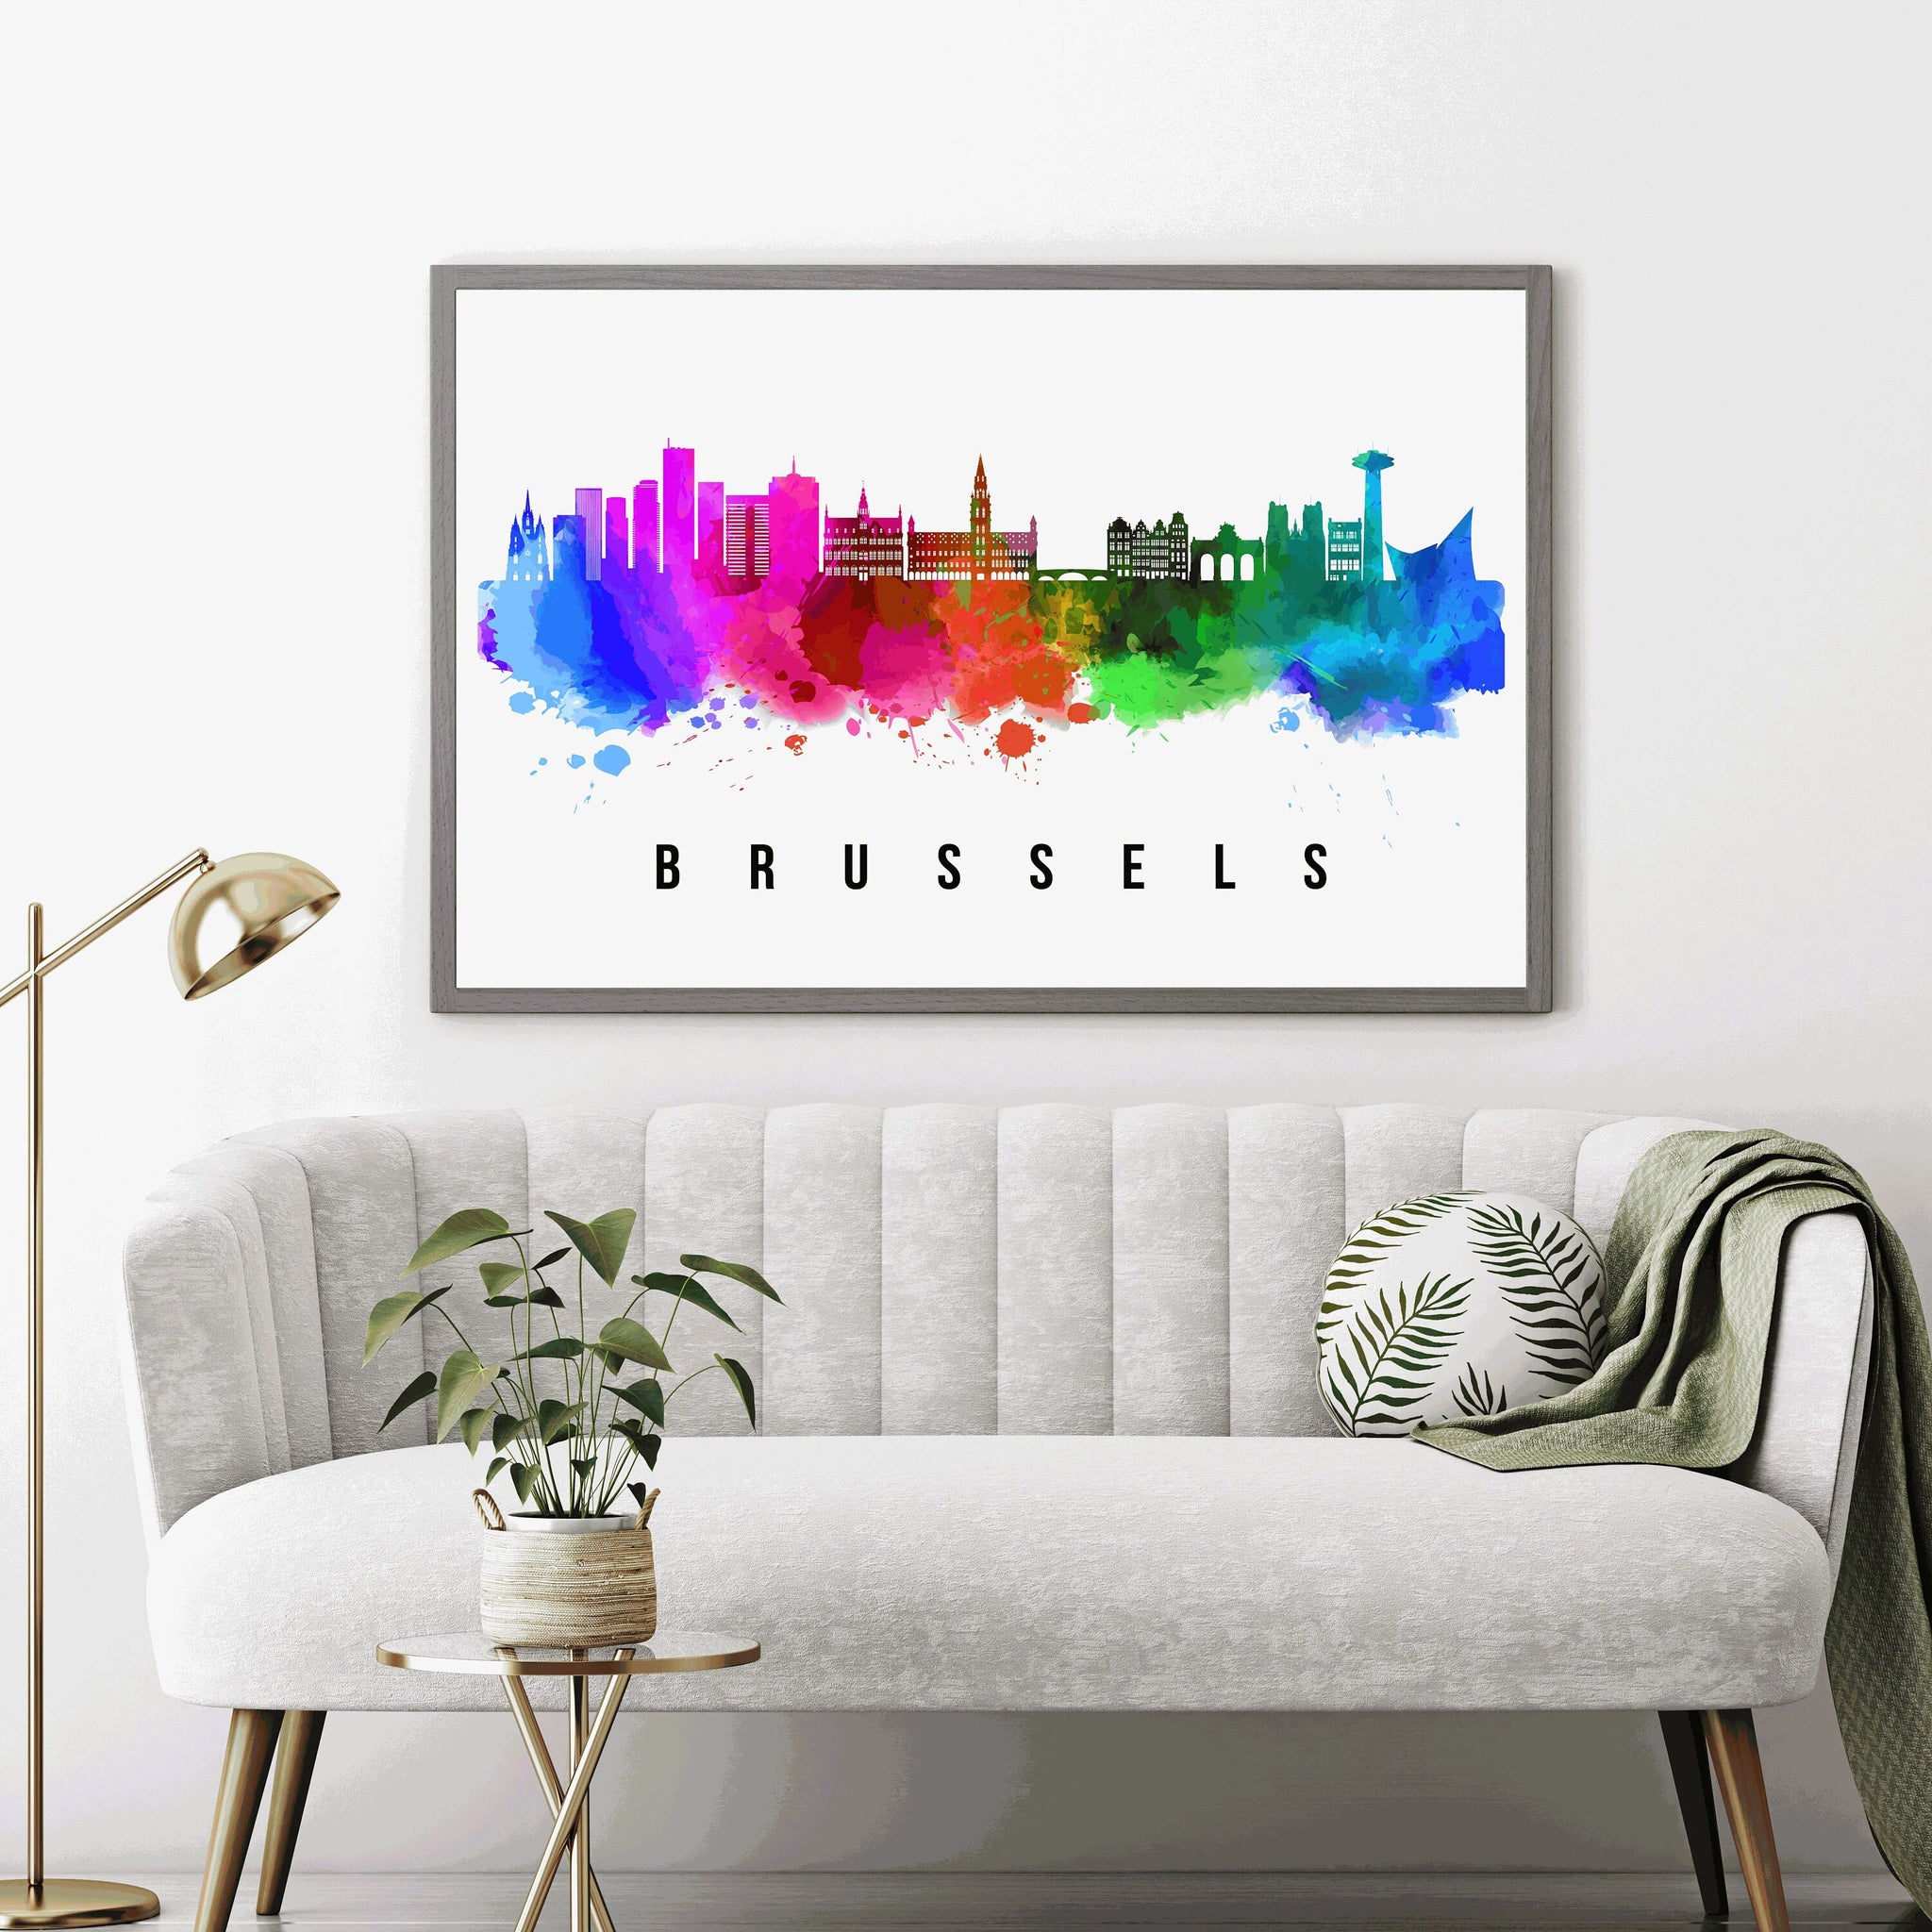 BRUSSELS - BELGIUM Poster,  Skyline Poster Cityscape and Landmark Bordeaux Illustration Home Wall Art, Office Decor